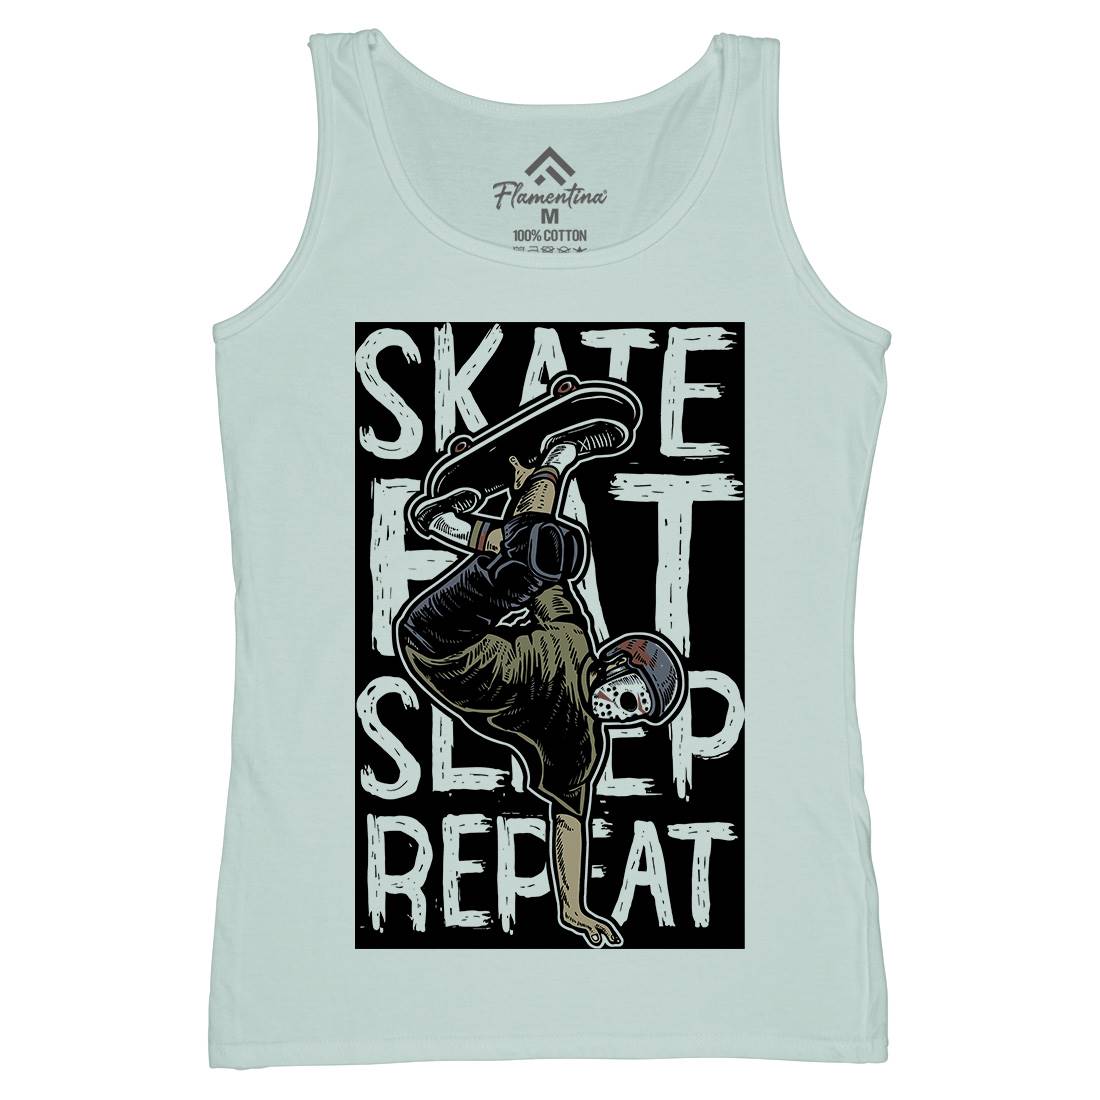 Eat Sleep Repeat Womens Organic Tank Top Vest Skate A572